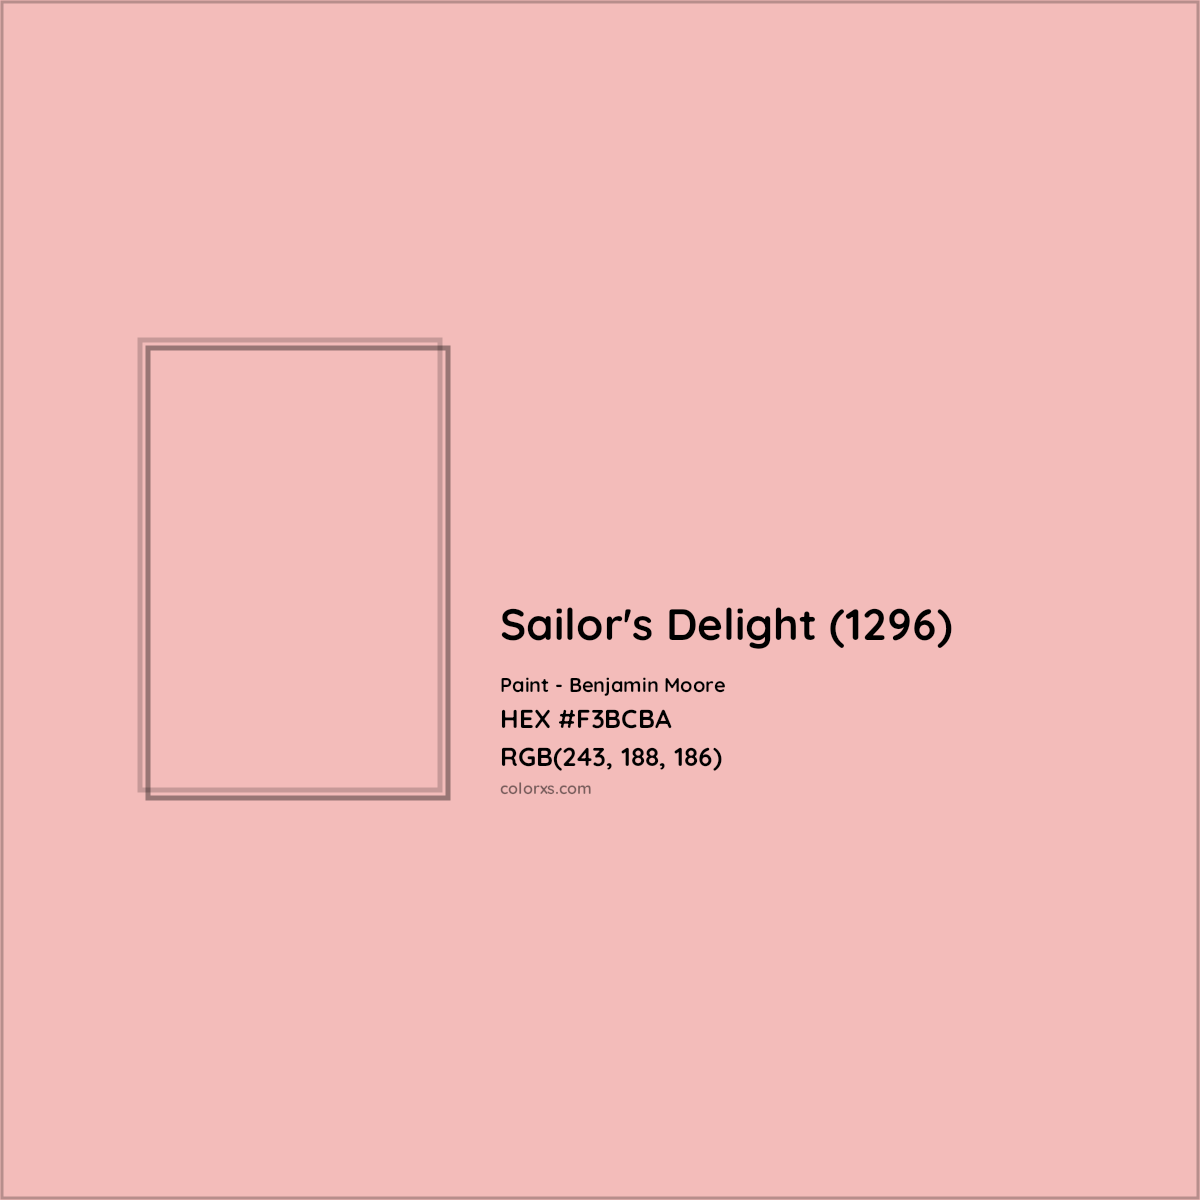 HEX #F3BCBA Sailor's Delight (1296) Paint Benjamin Moore - Color Code